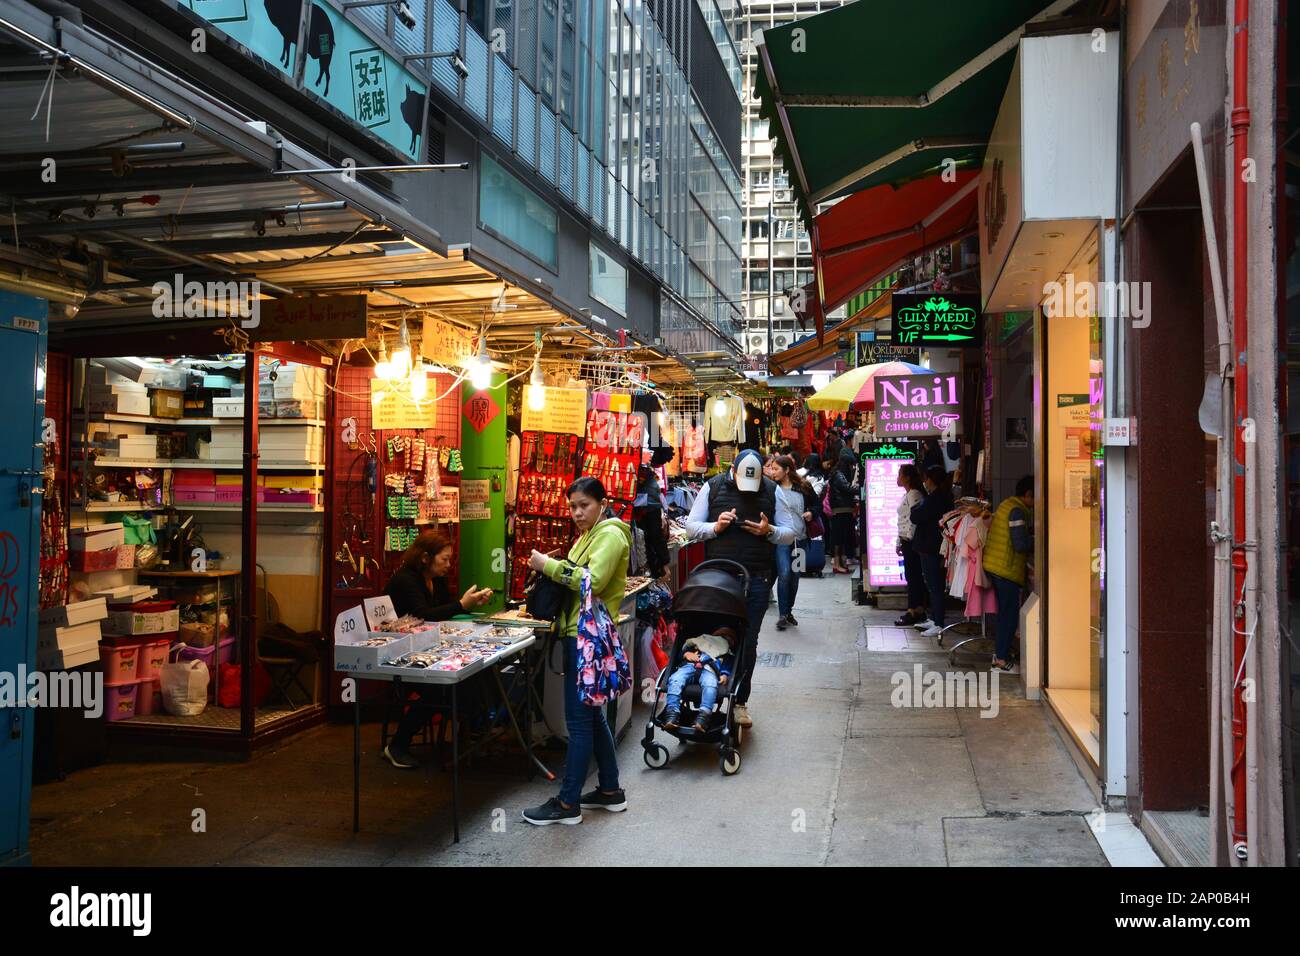 A narrow street market selling clothing in the Sheng Wan area of Hong Kong. Stock Photo